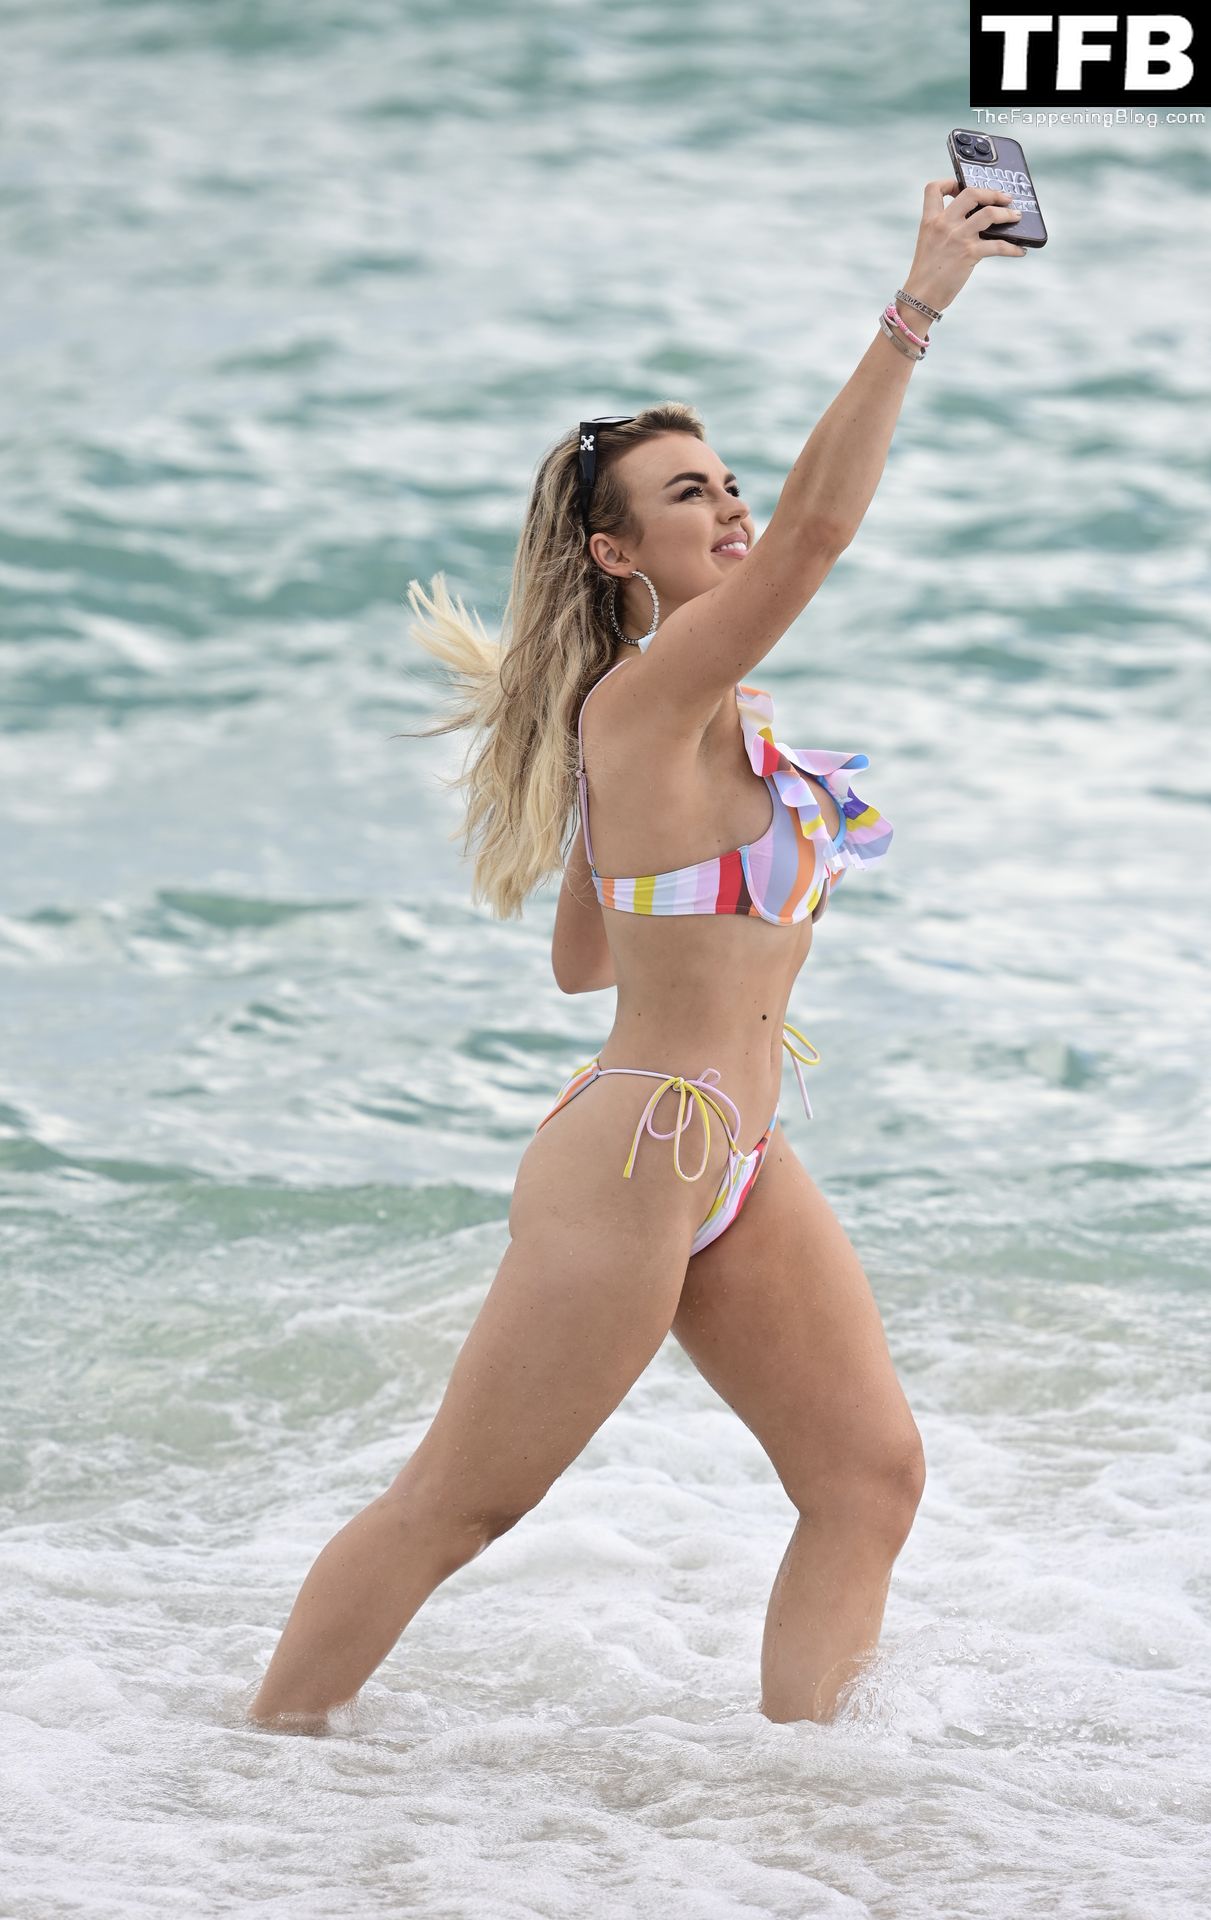 Tallia Storm Shows Off Amazing Figure in a Bikini While Enjoying The Miami Sunshine (41 Photos)